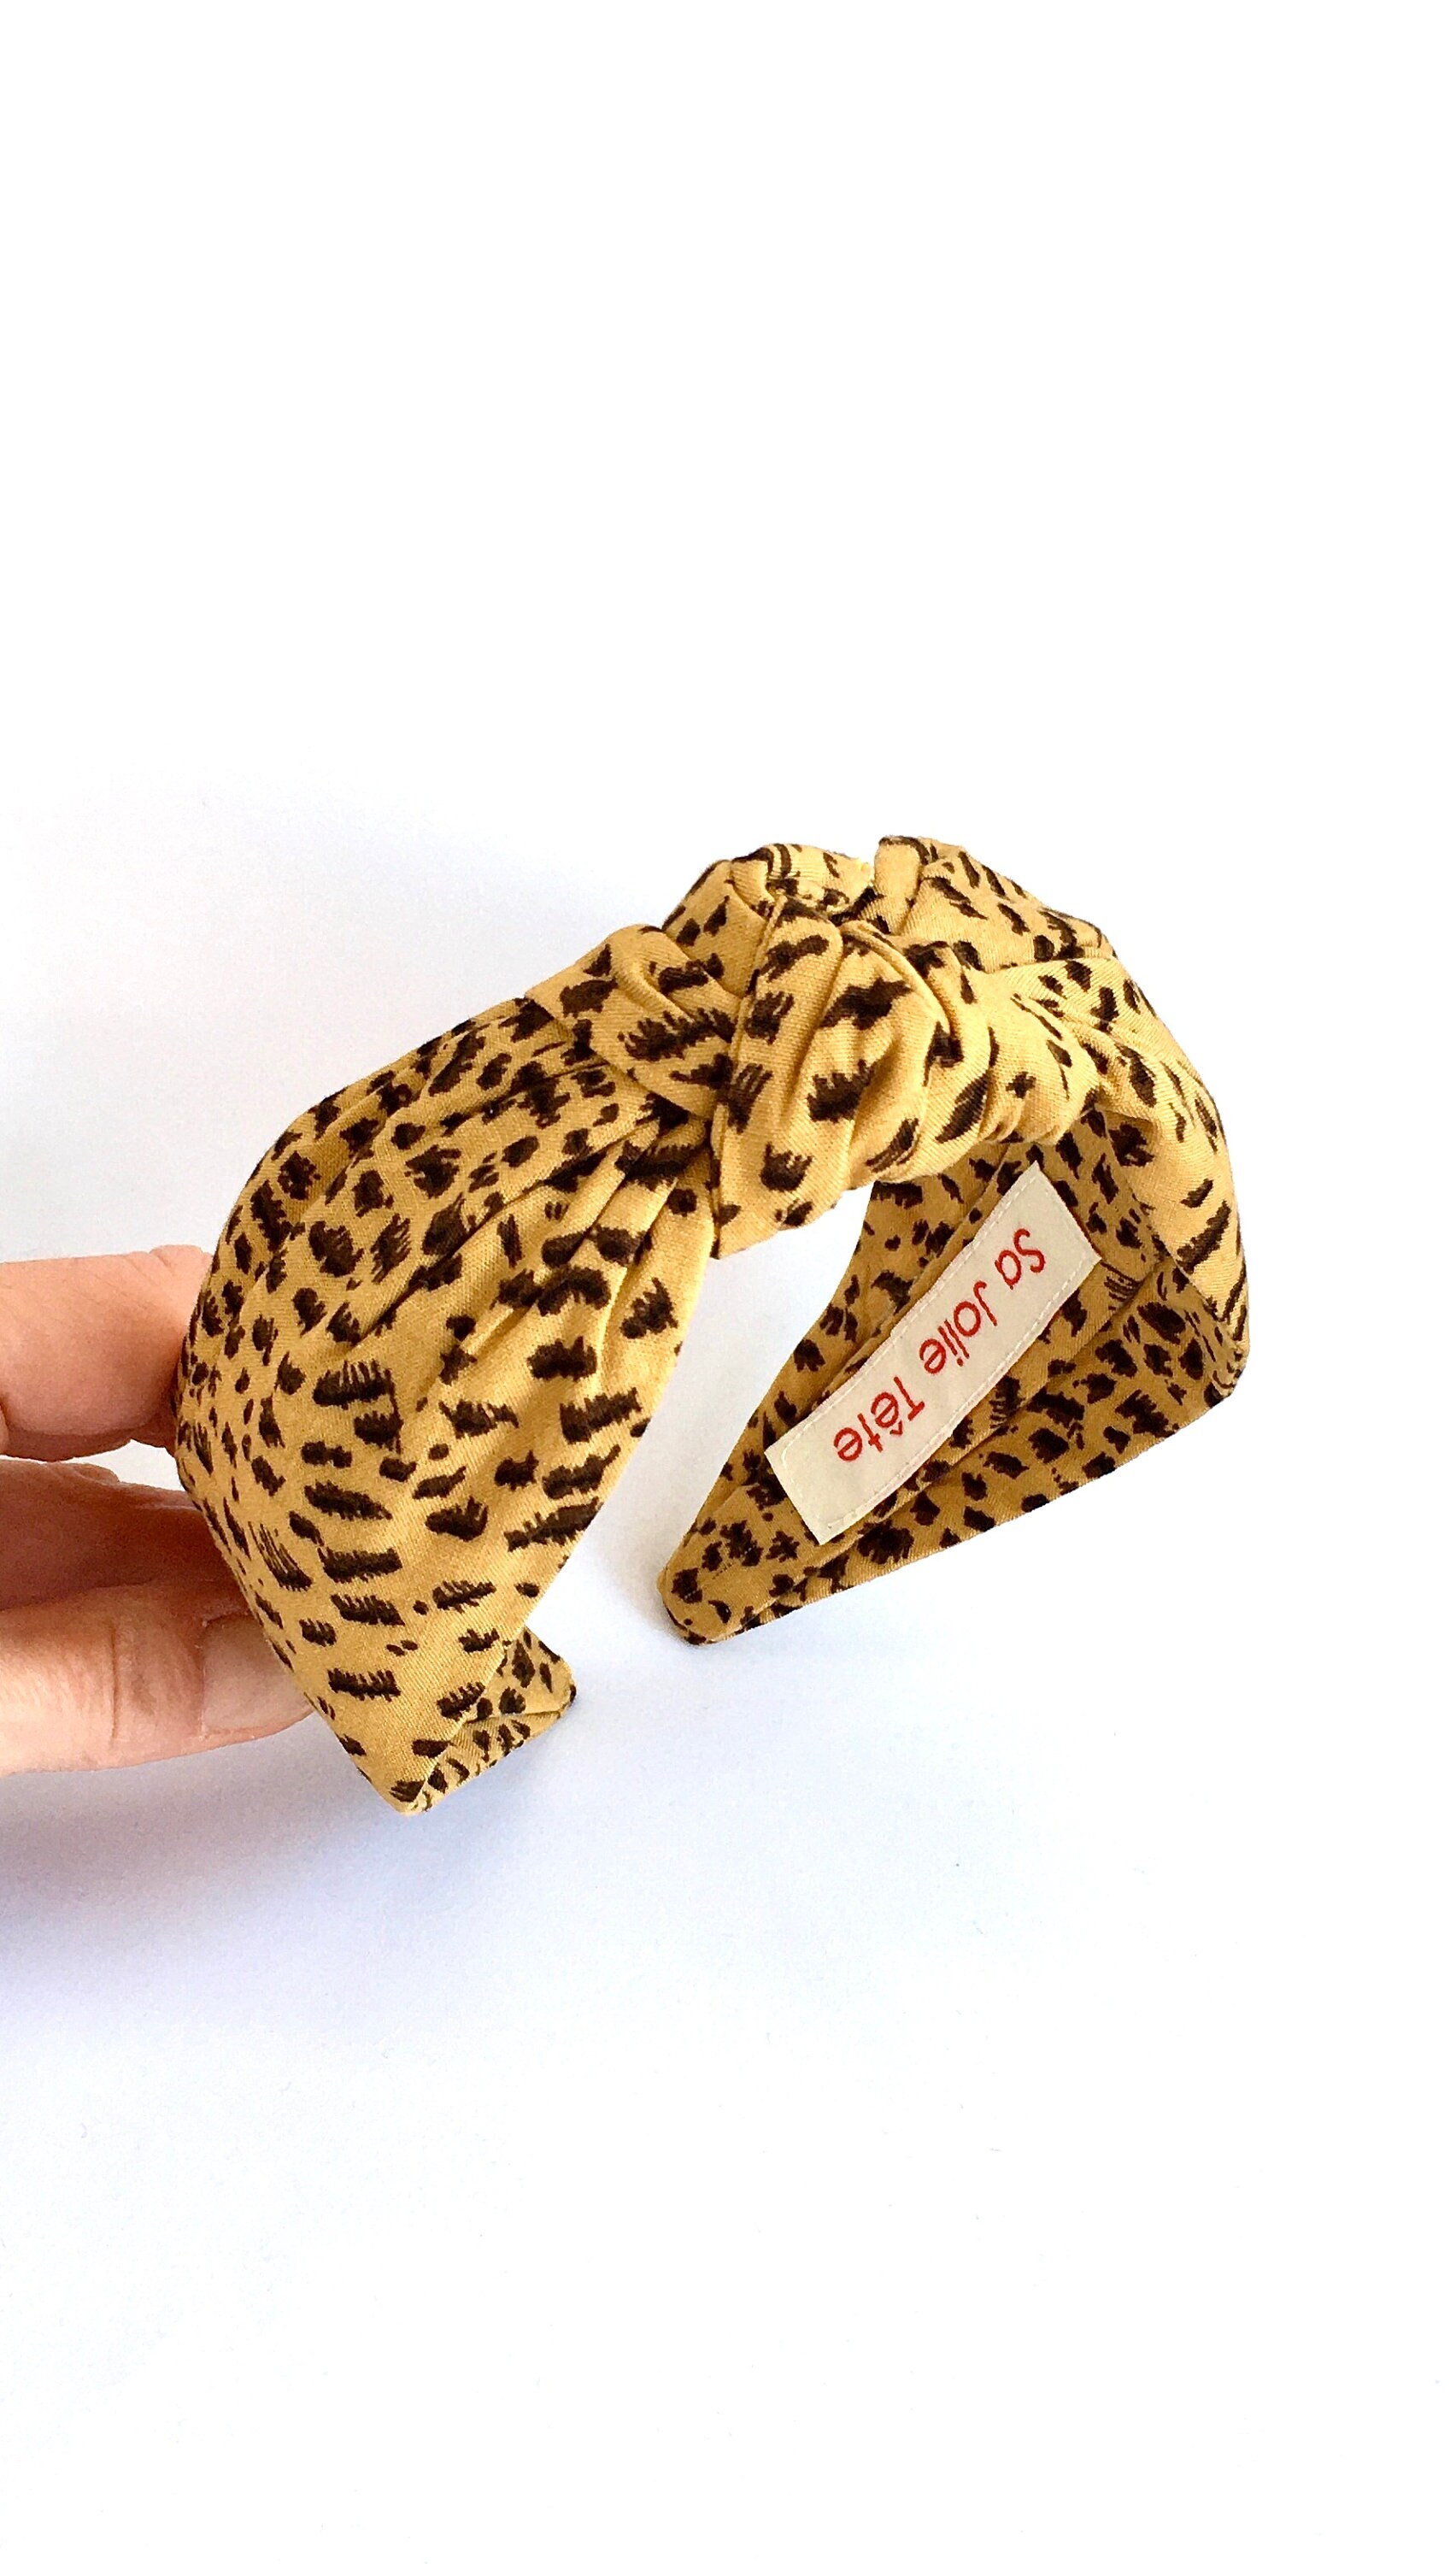 Gift Turban Headband Head Band For Women Yellow Top Knot Head Band Wide Hairband Leopard Print Hair Band Animal Print Knot Headband